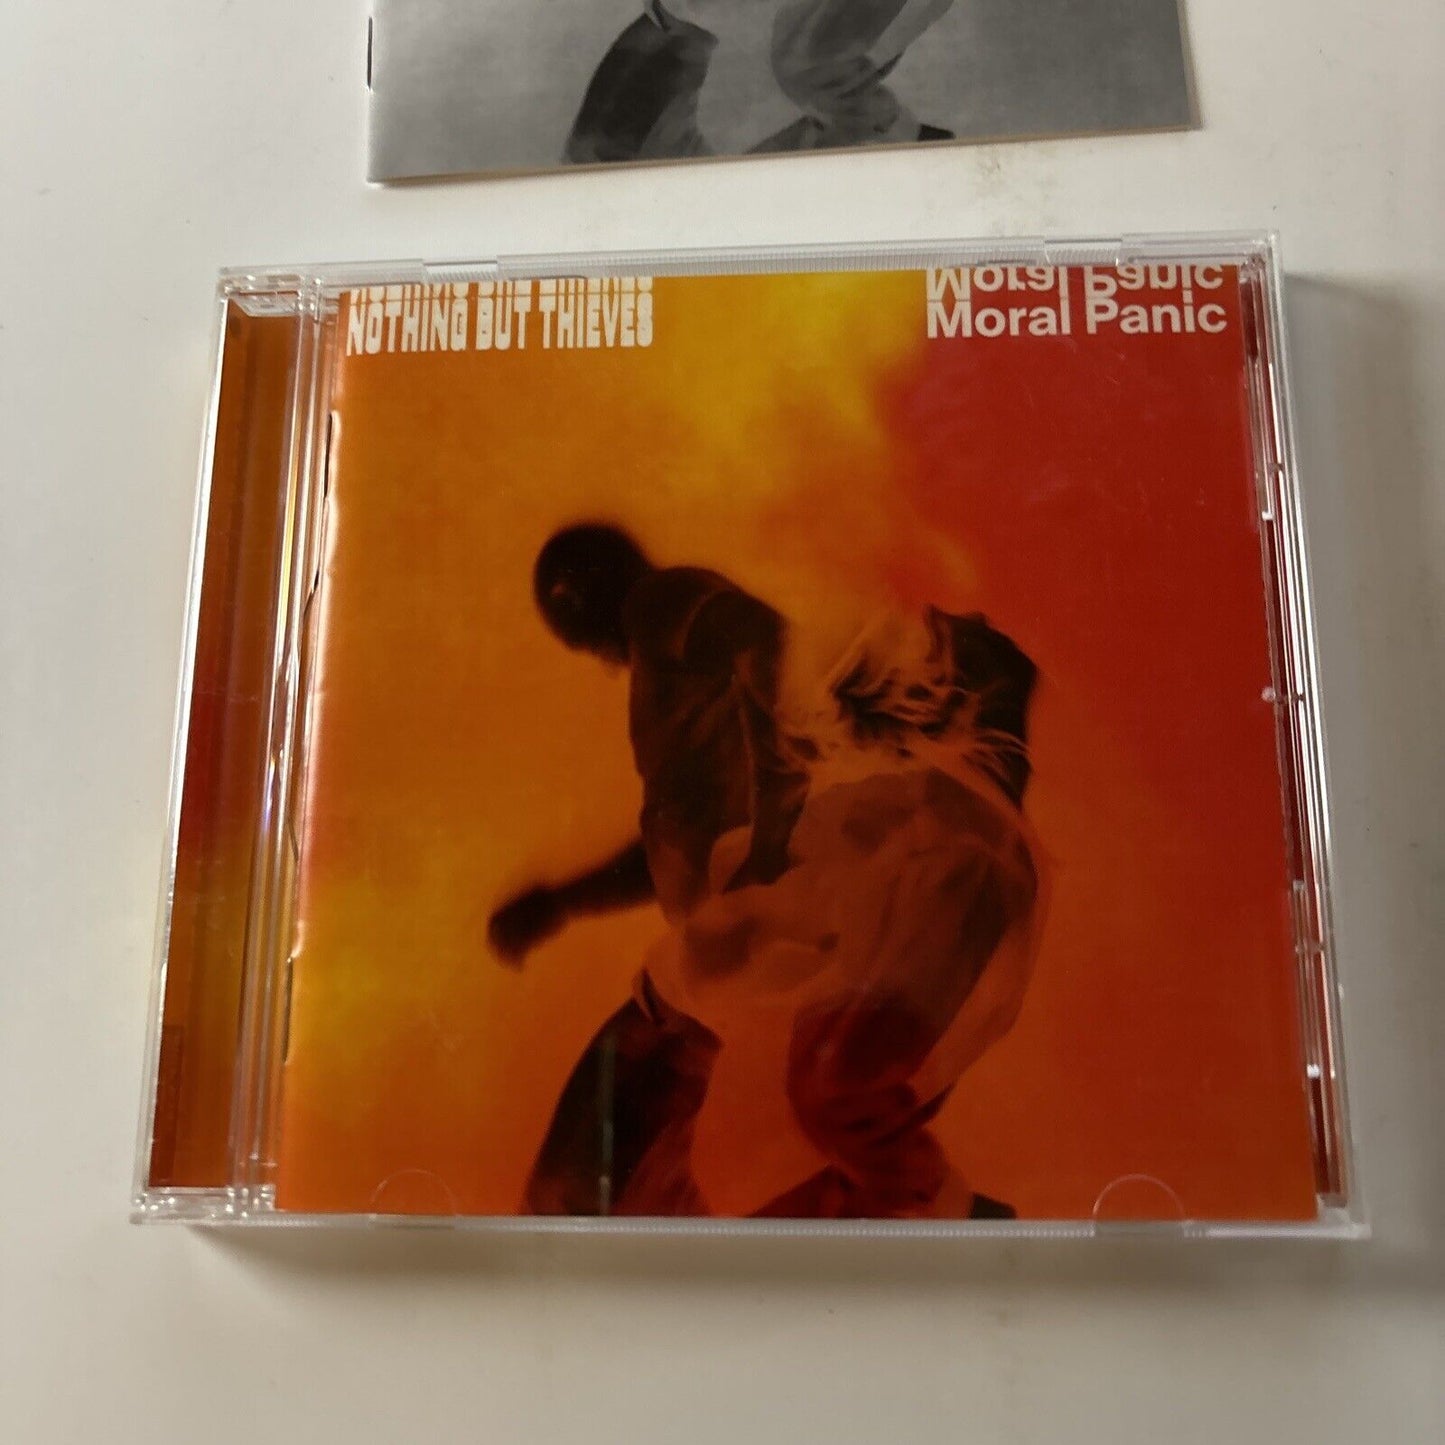 Nothing But Thieves - Moral Panic [Japan Bonus Track] (CD, 2020) Sicp-6353 Japan